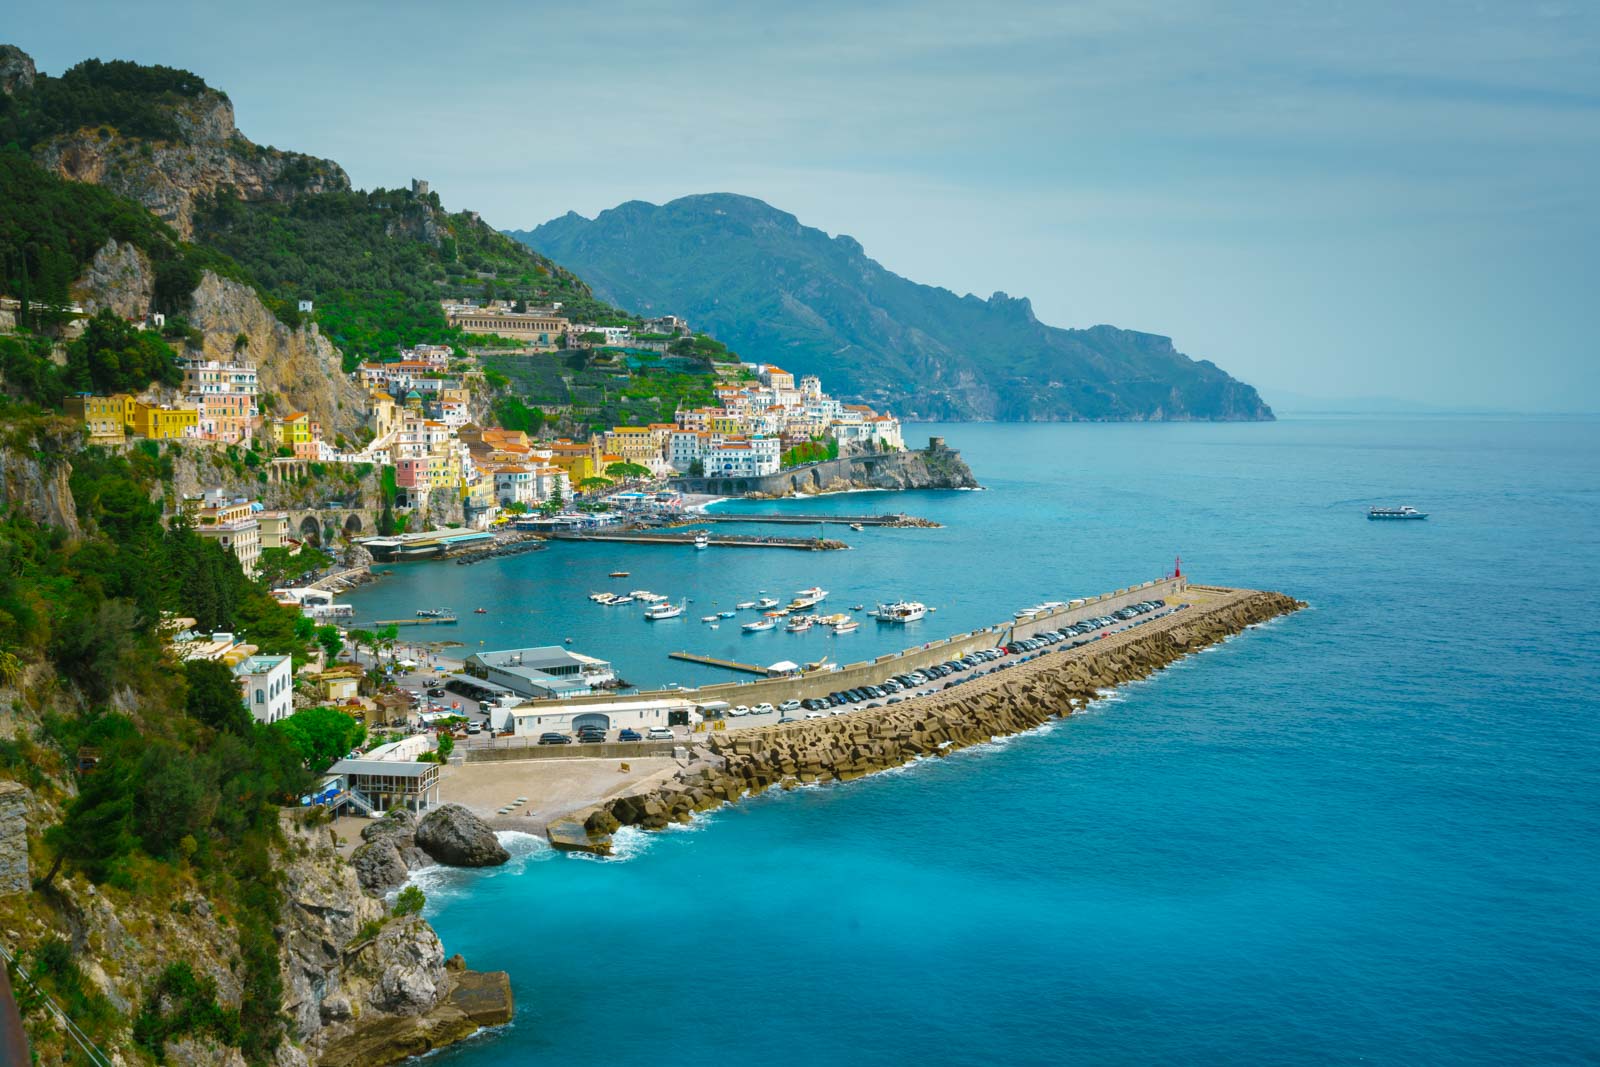 Coastal towns along the Amalfi Coast